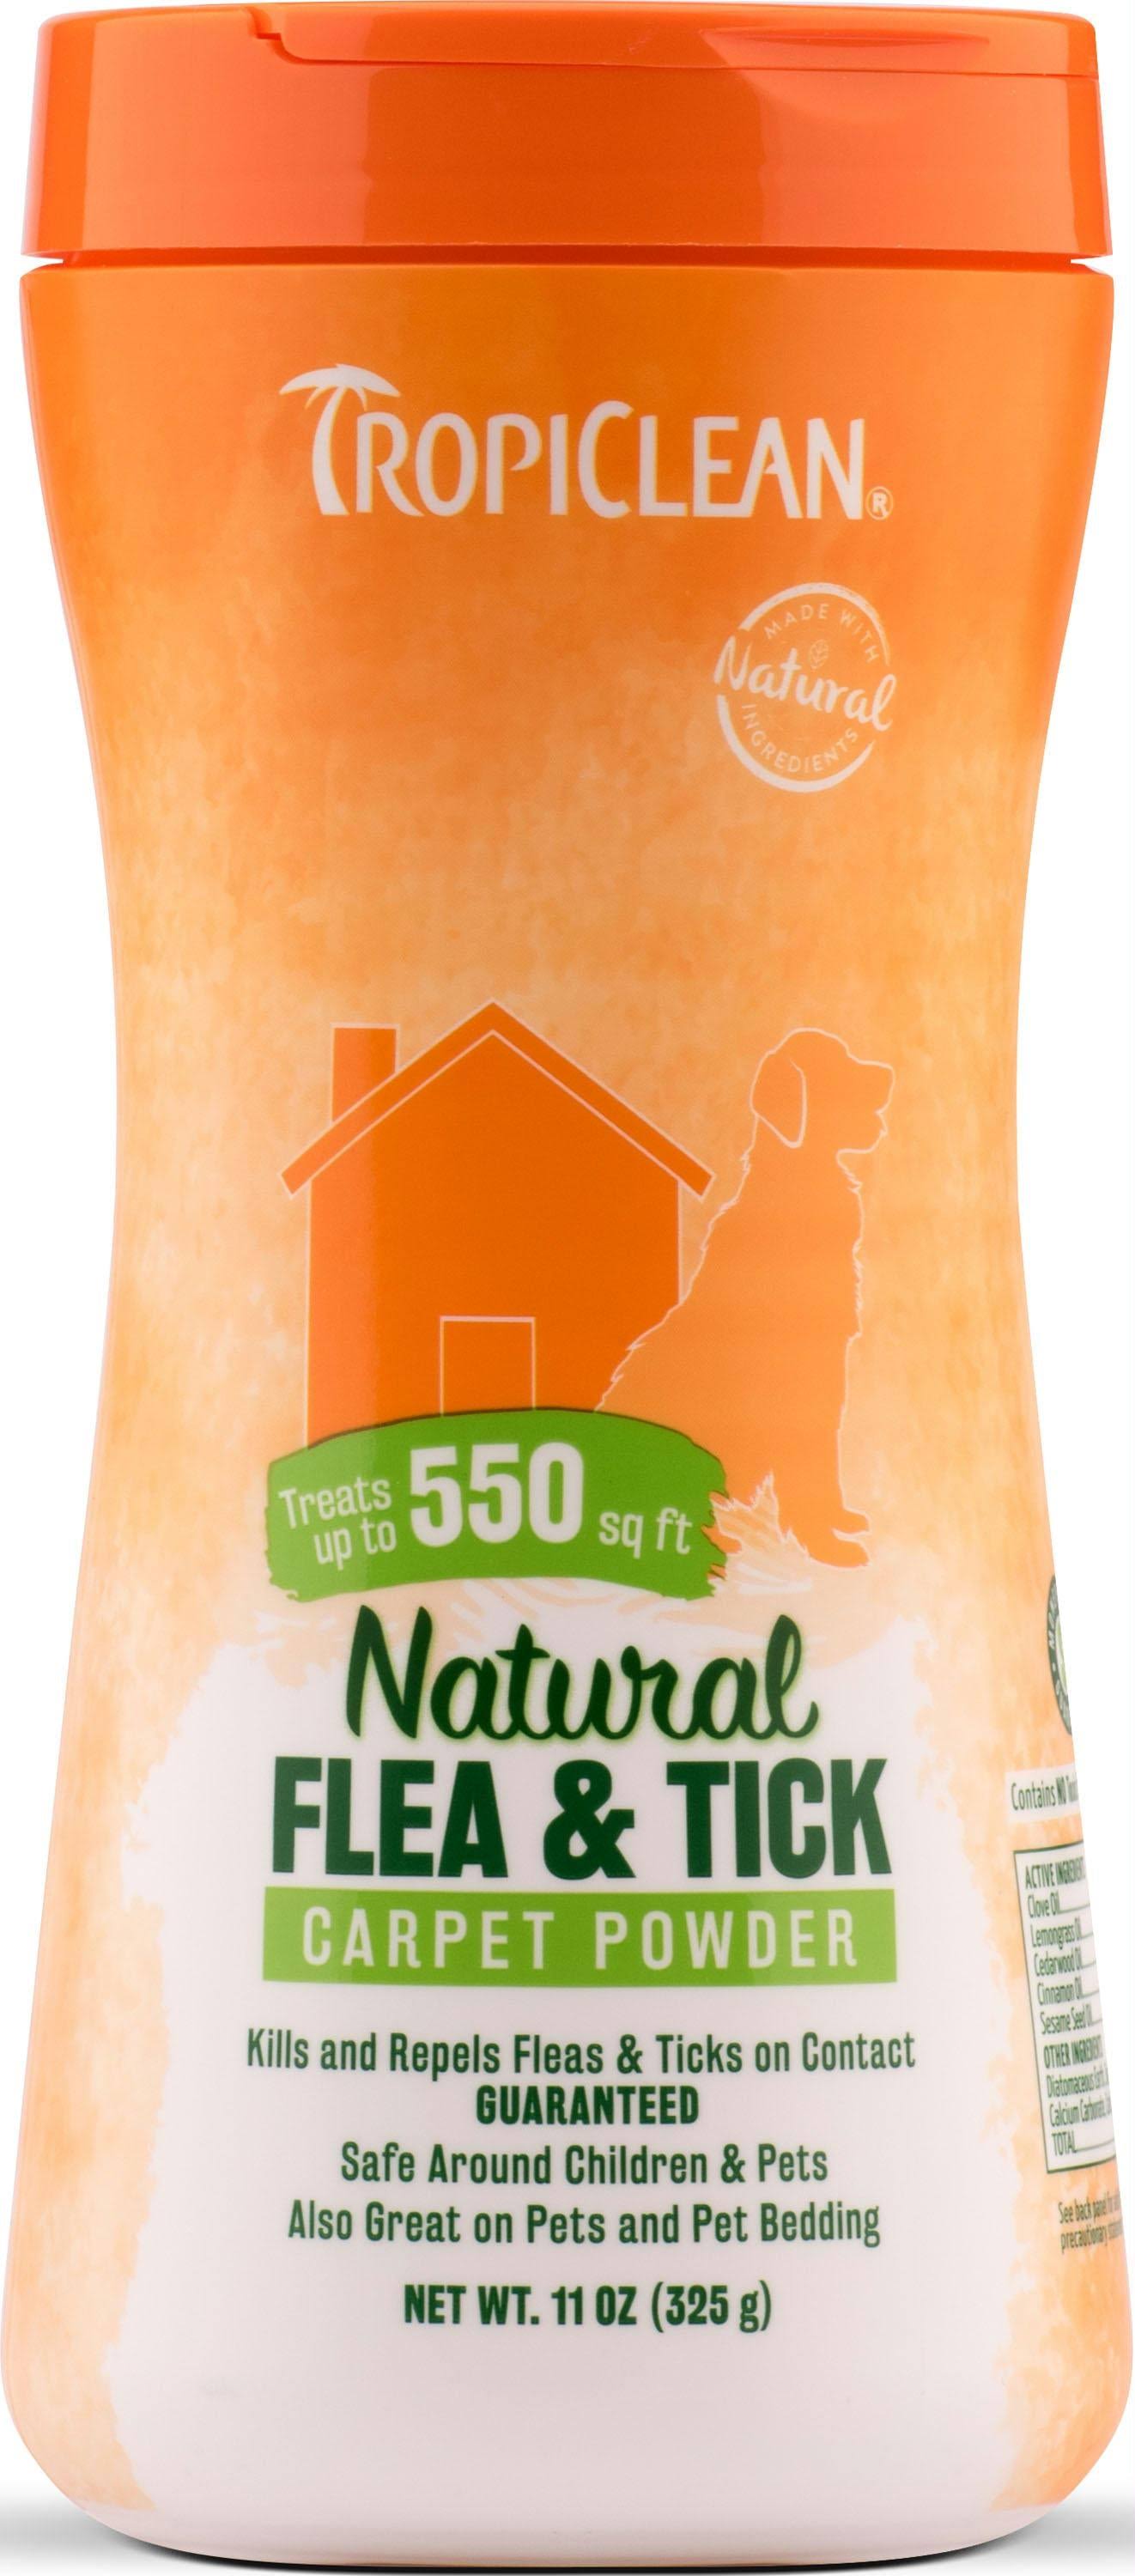 Tropiclean Natural Flea & Tick Carpet Powder - 325g